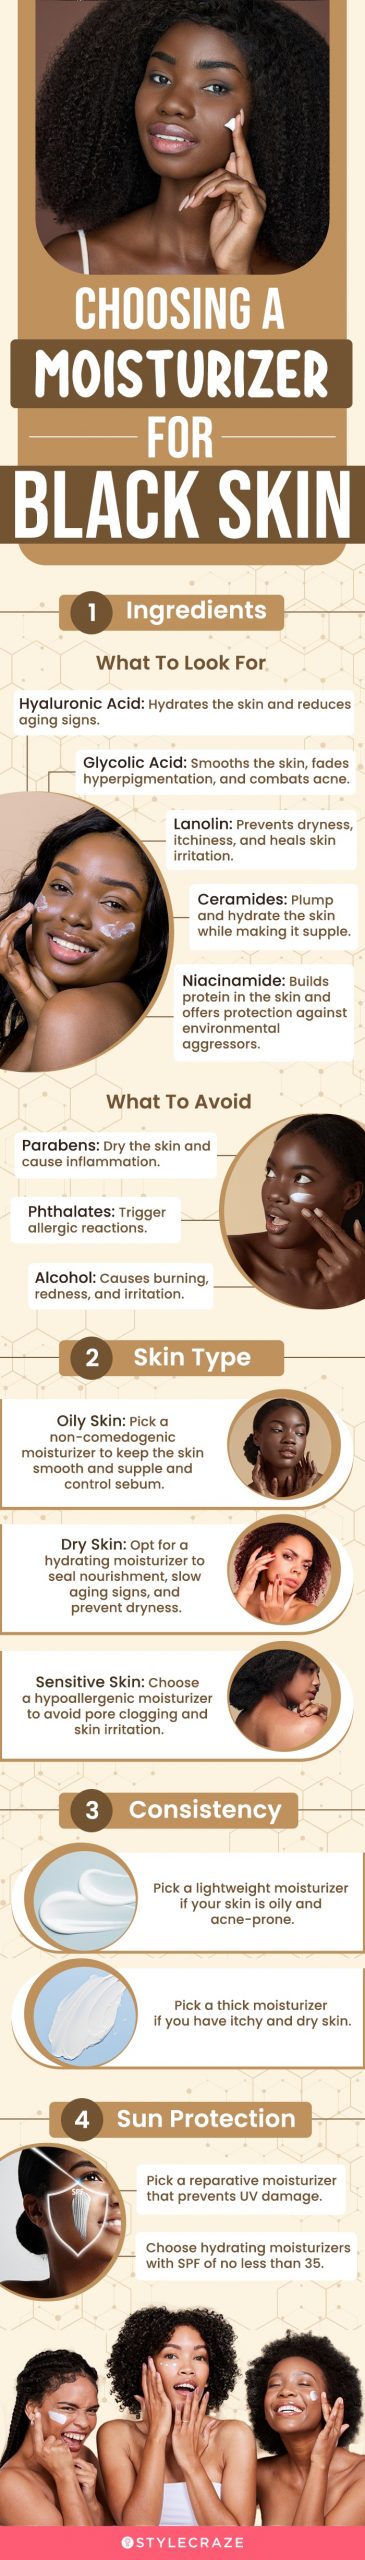 Choosing A Moisturizer For Black Skin (infographic)